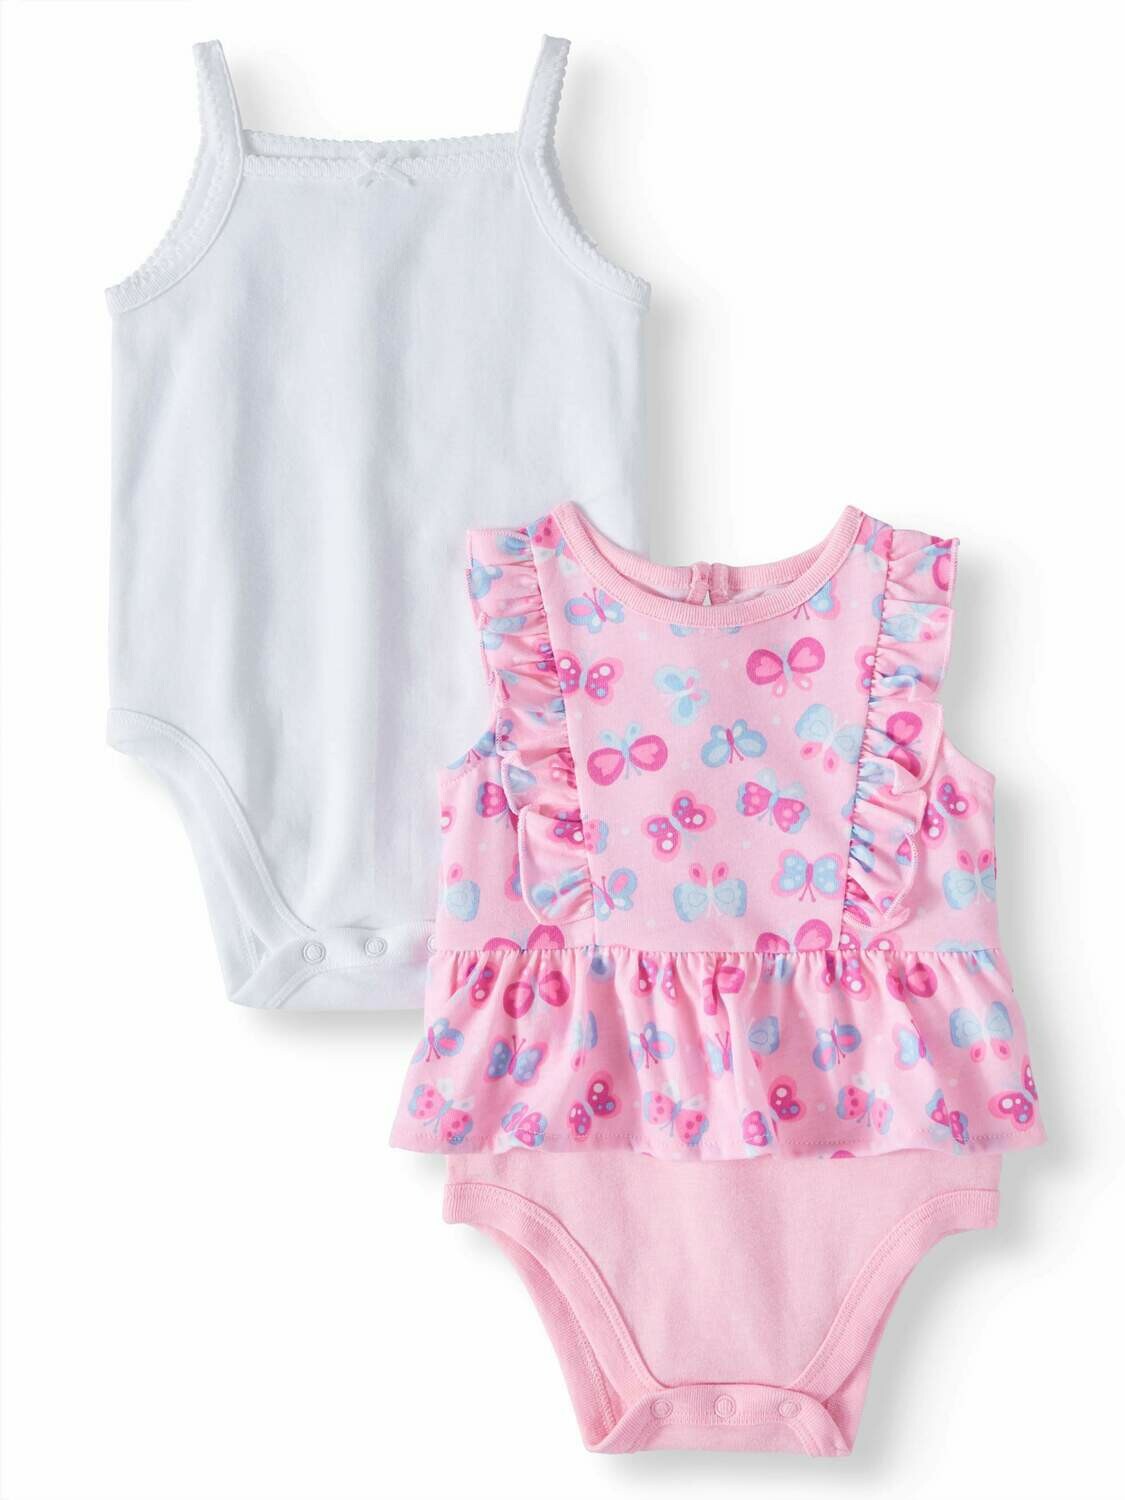 Garanimals Baby Girls 2PC Body Suit Set